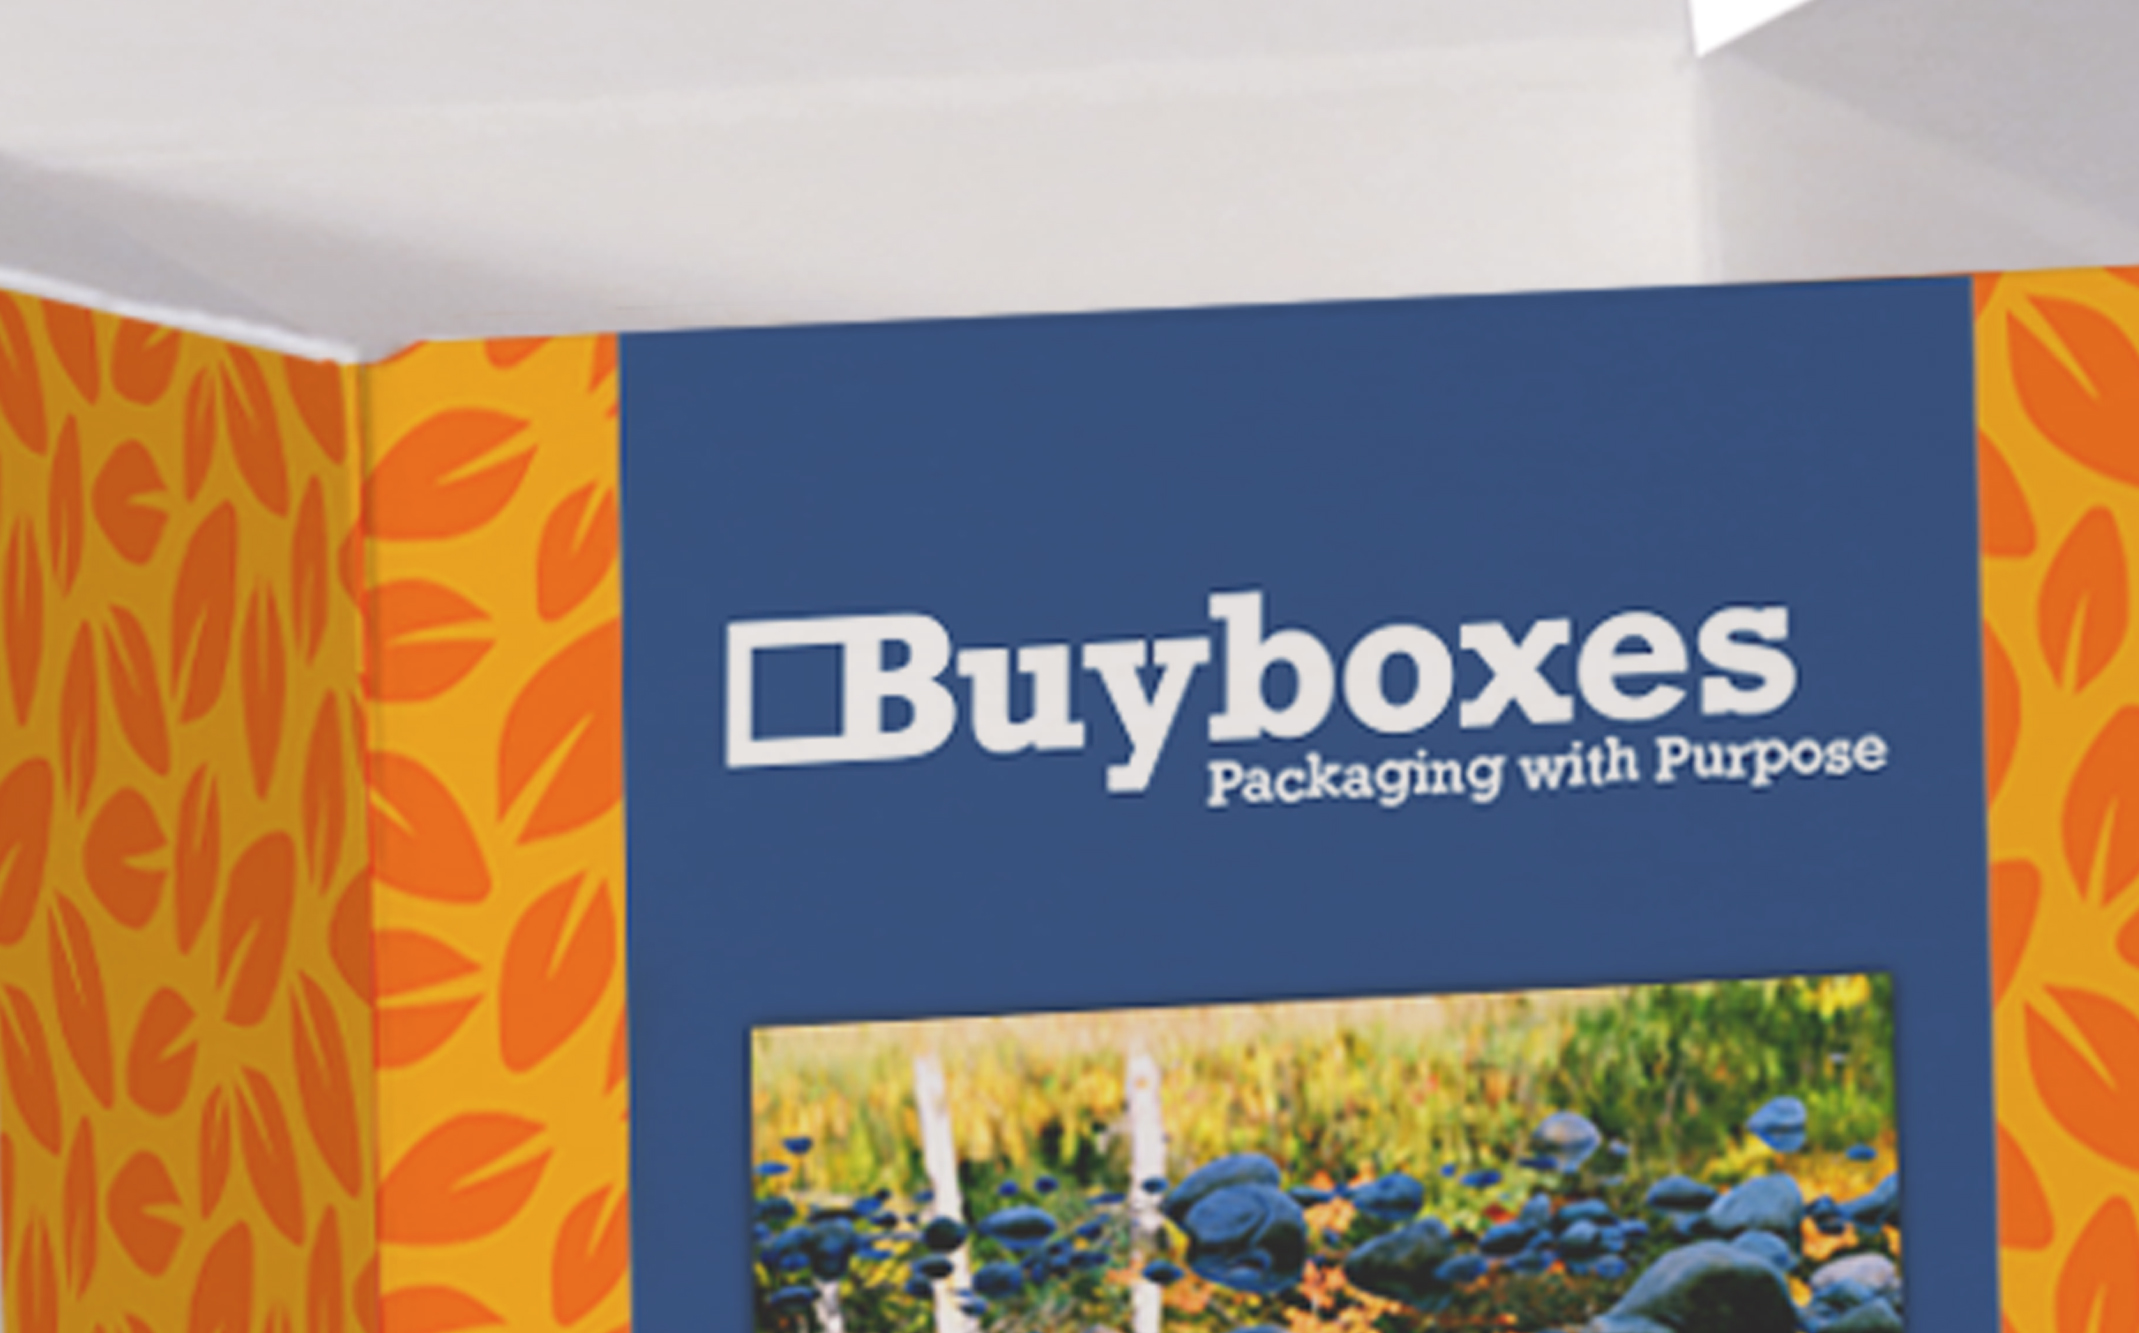 Order Custom Folding Boxes & Product Boxes